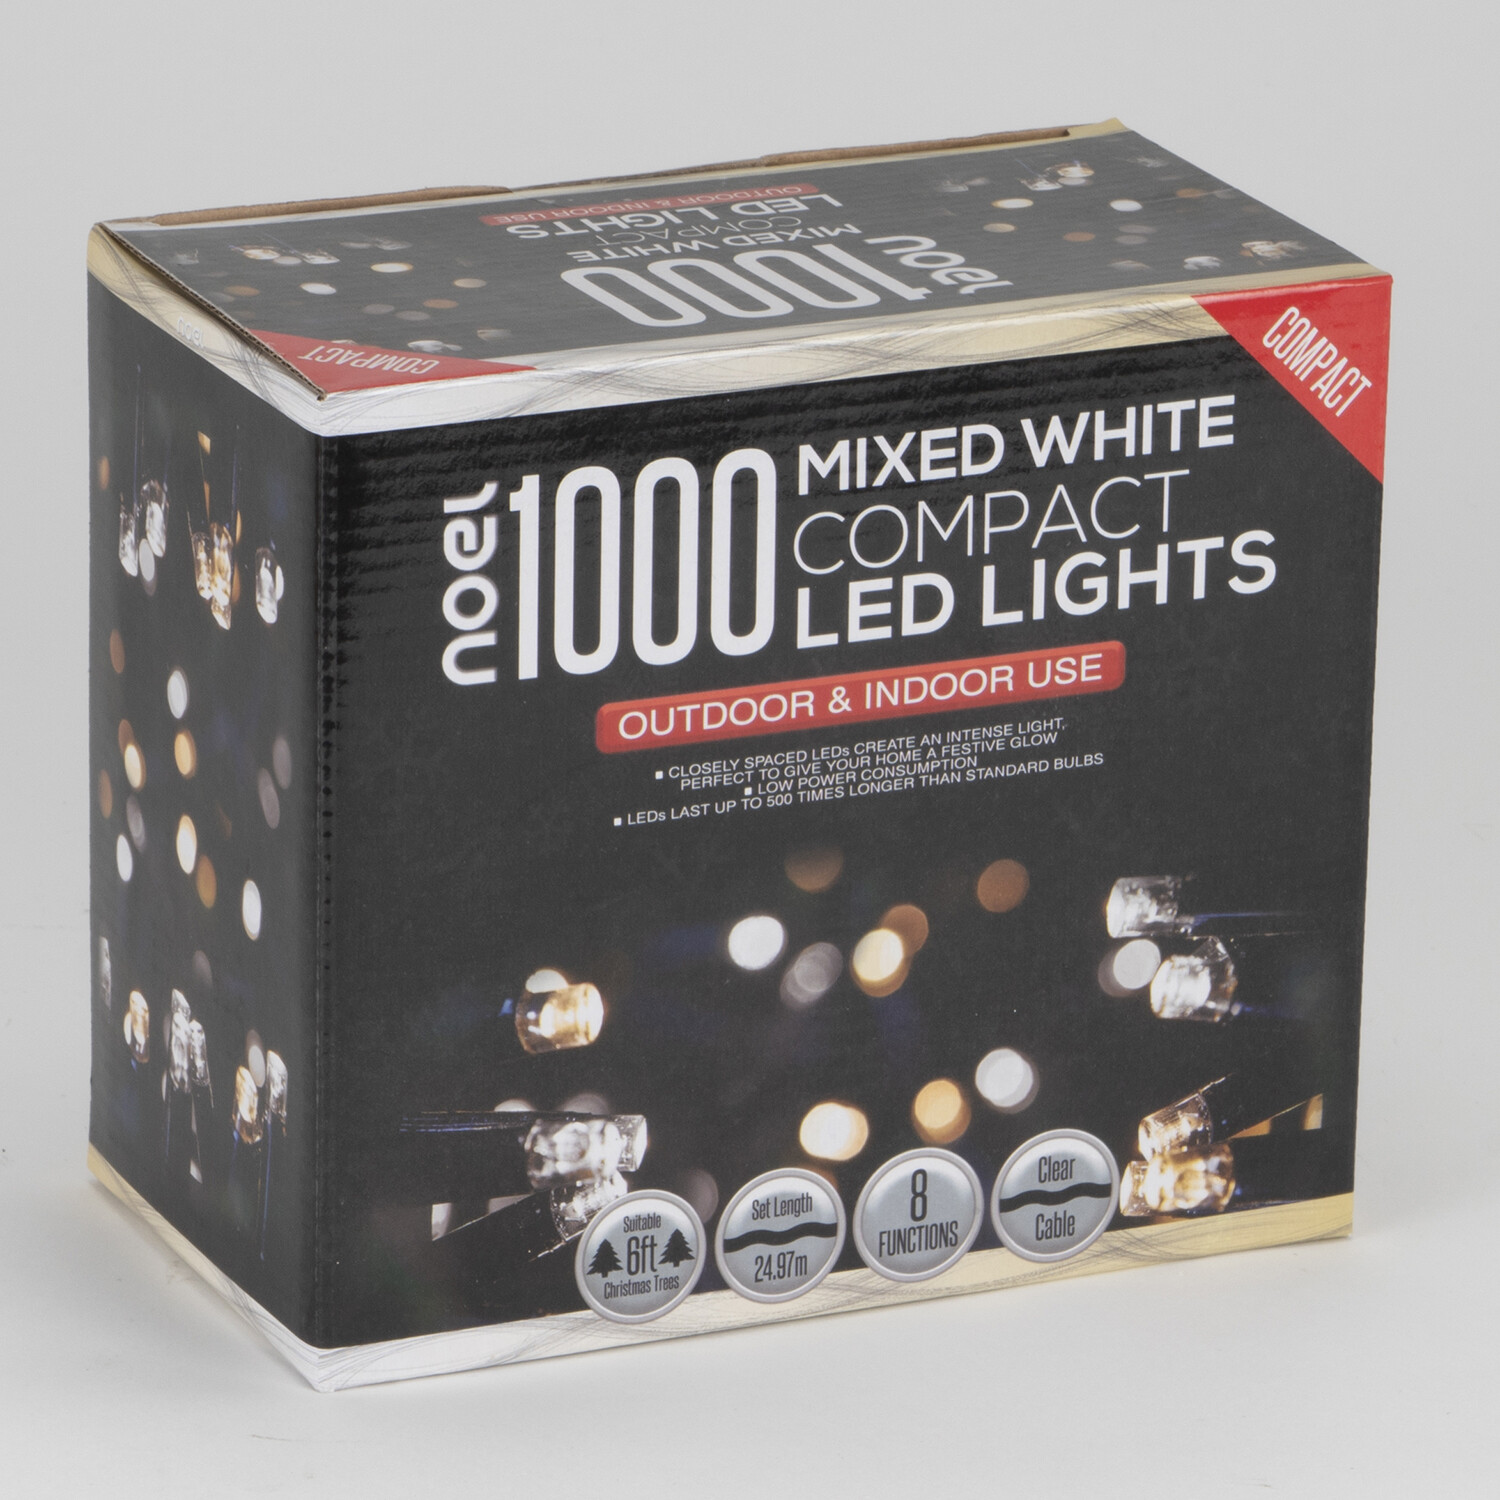 Compact LED Lights - Mixed White / 1000 Image